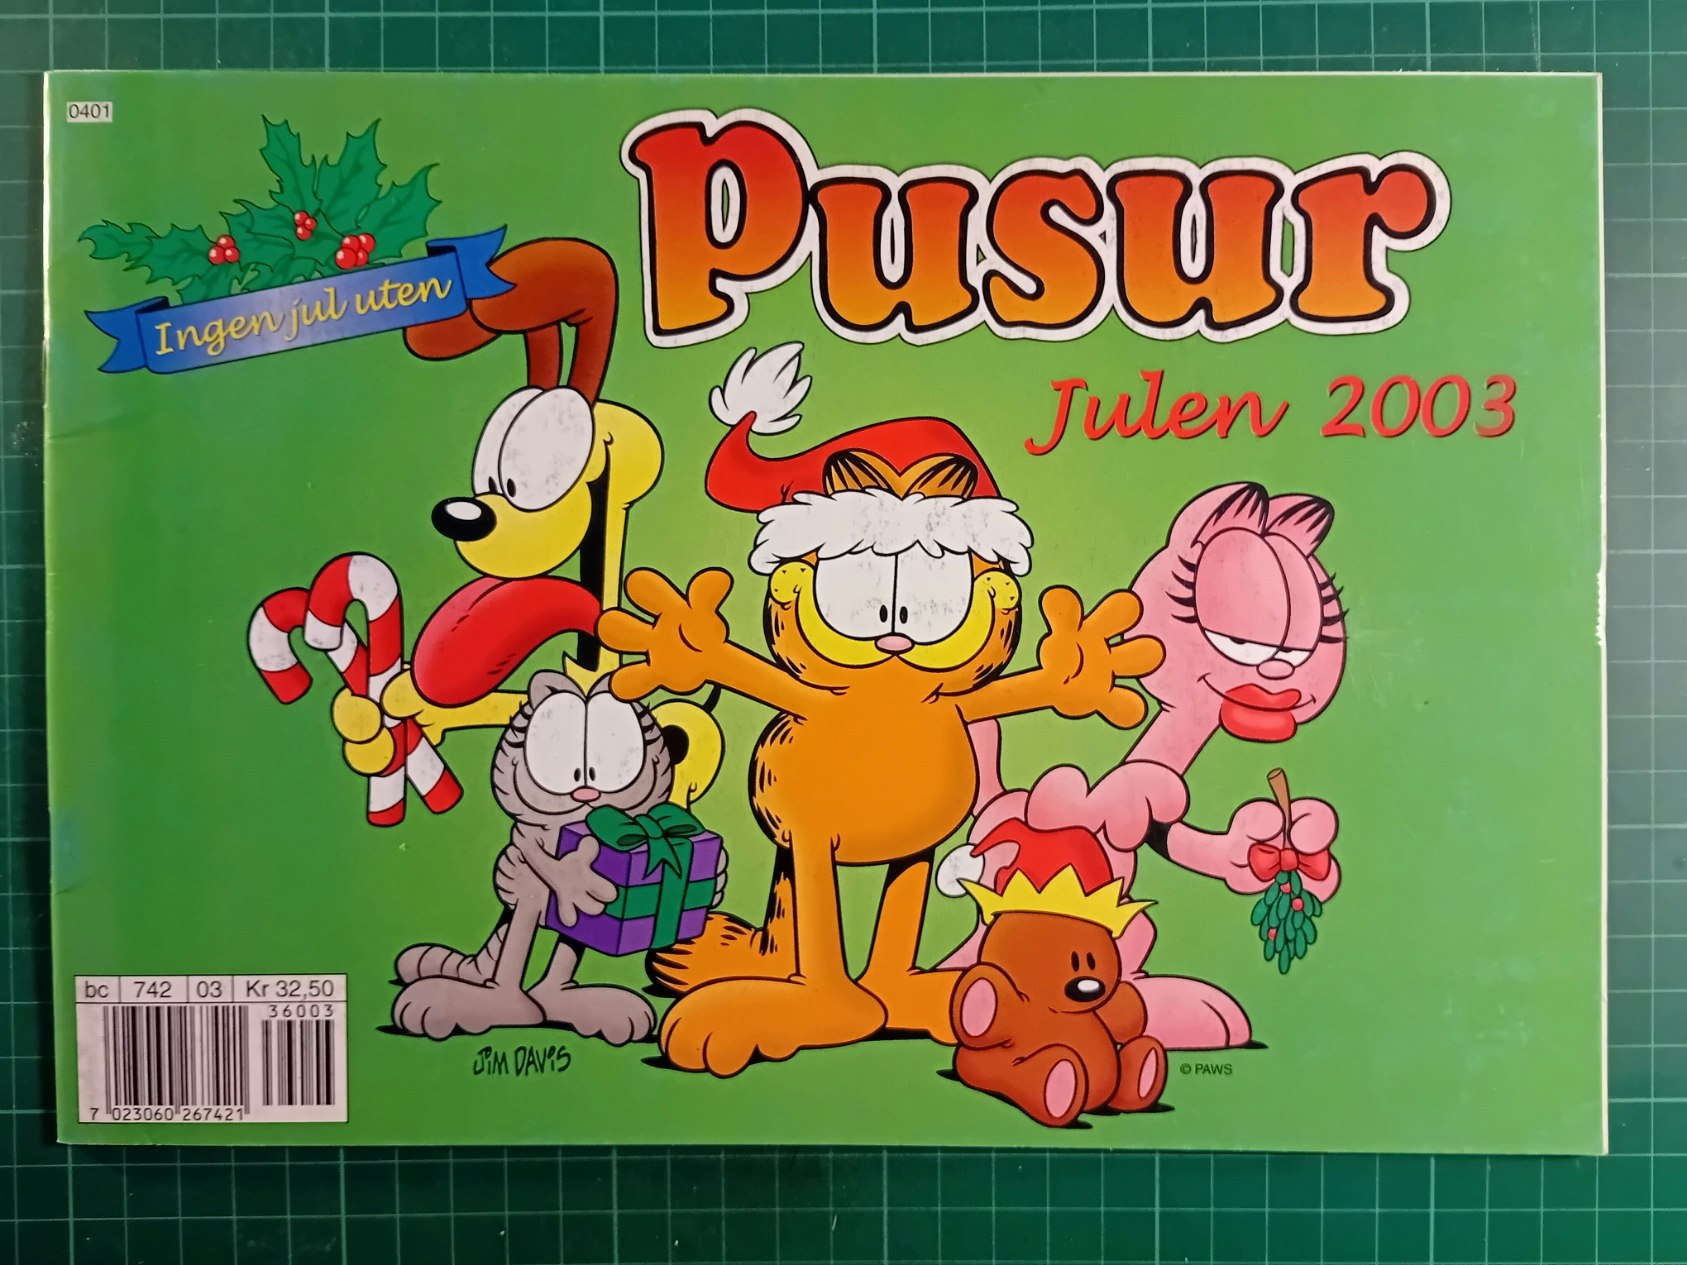 Pusur Julen 2003